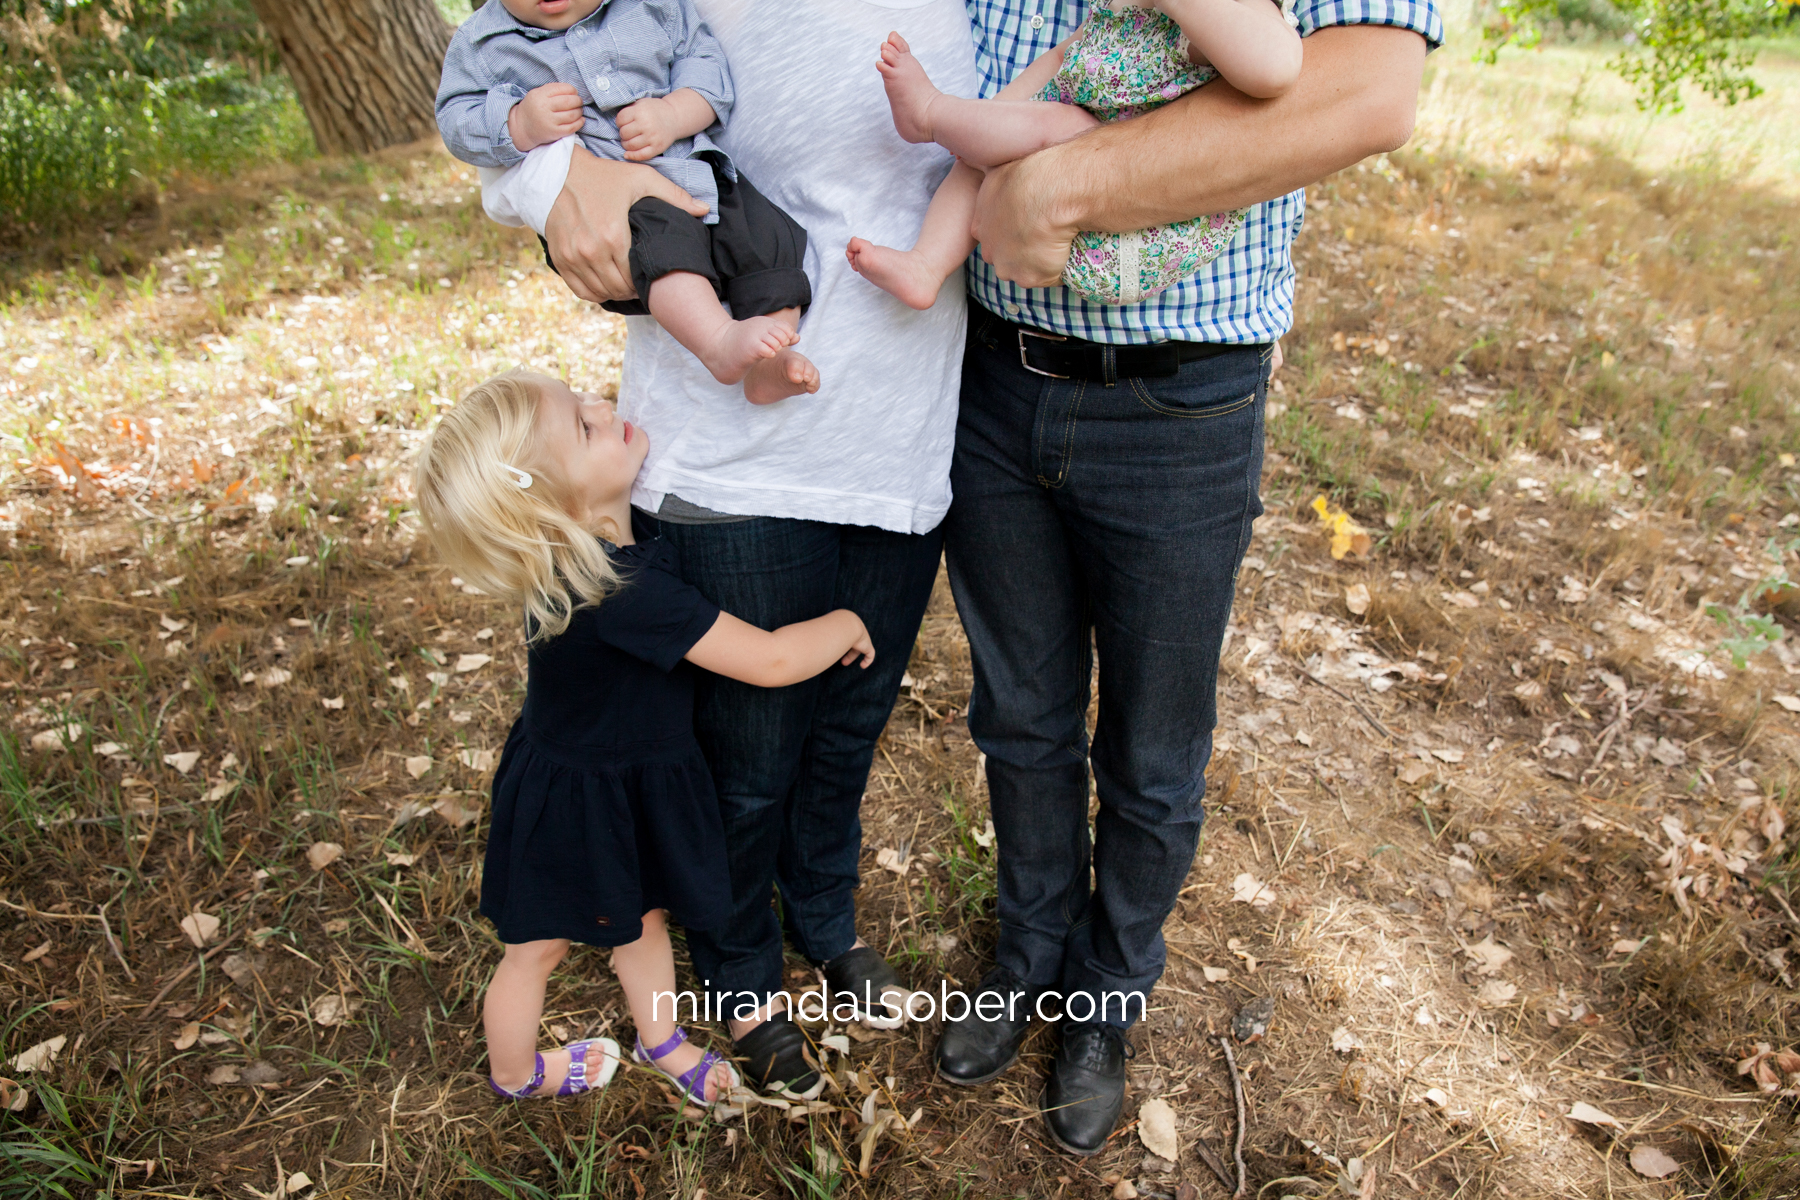 Boulder Family Photography, Miranda L. Sober Photography